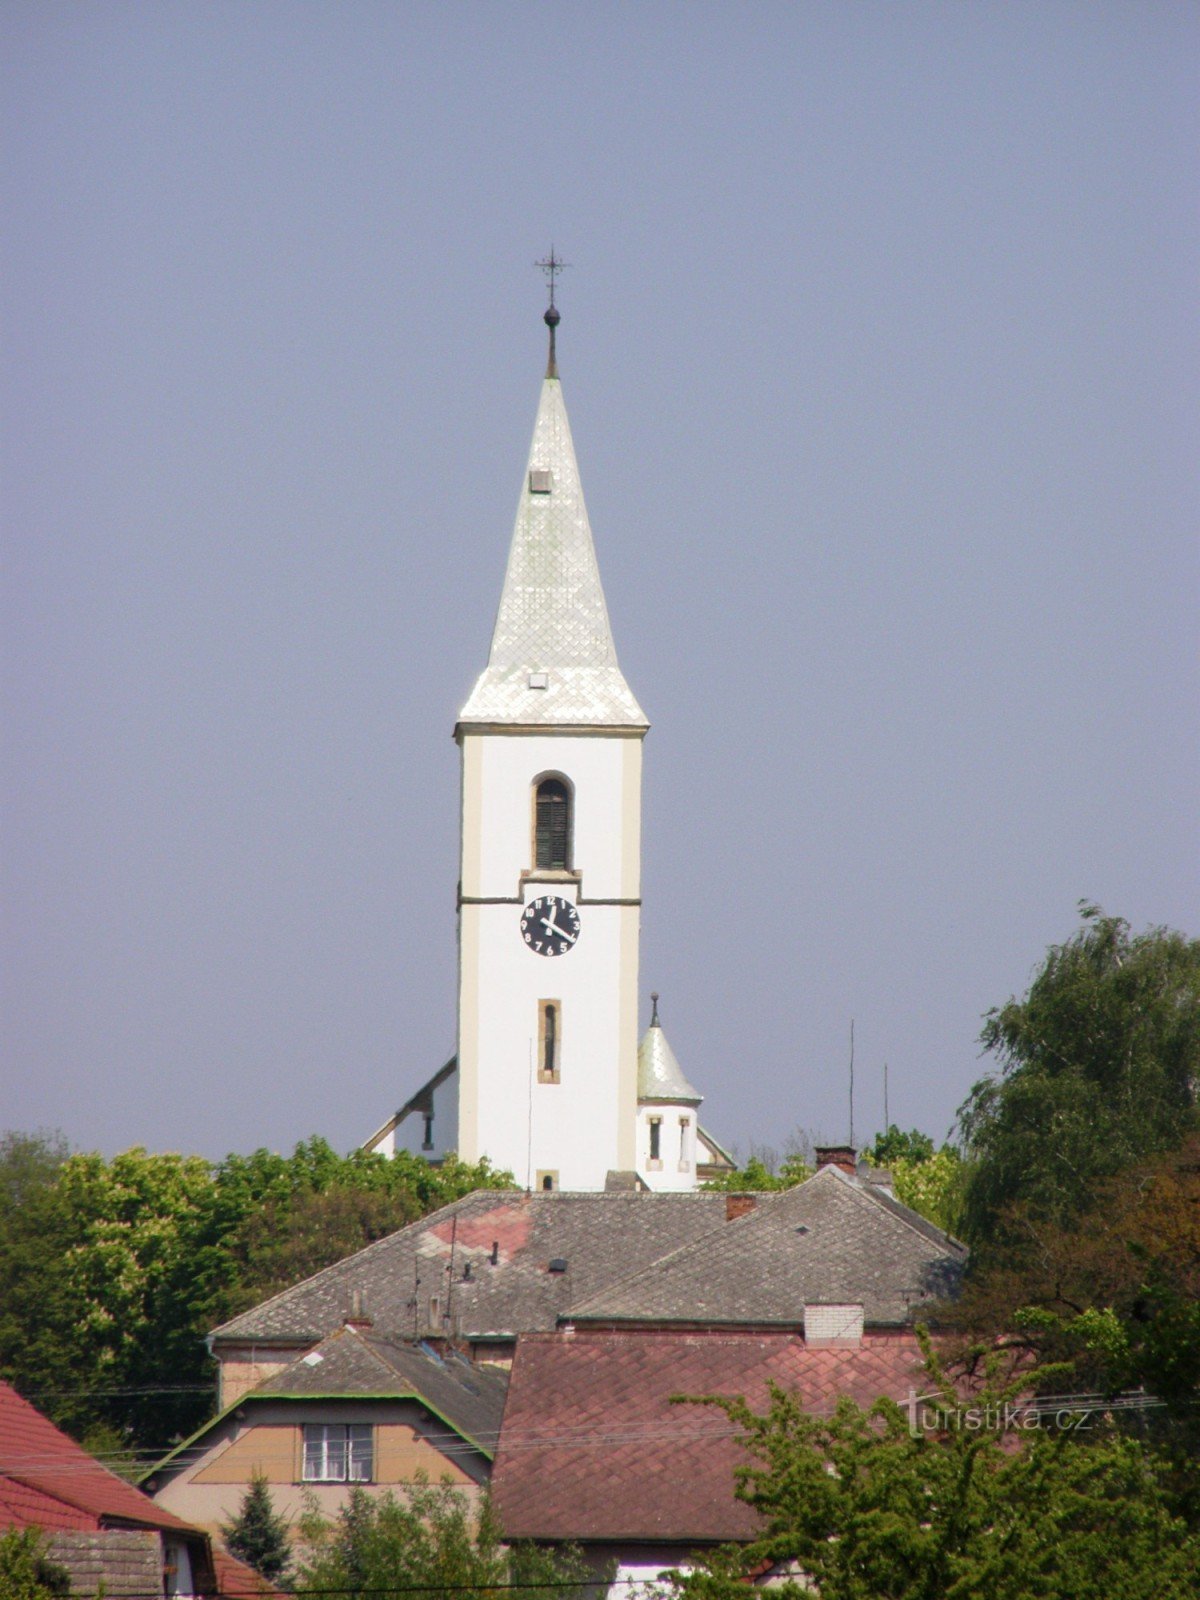 Stračov - Nhà thờ St. Jakub